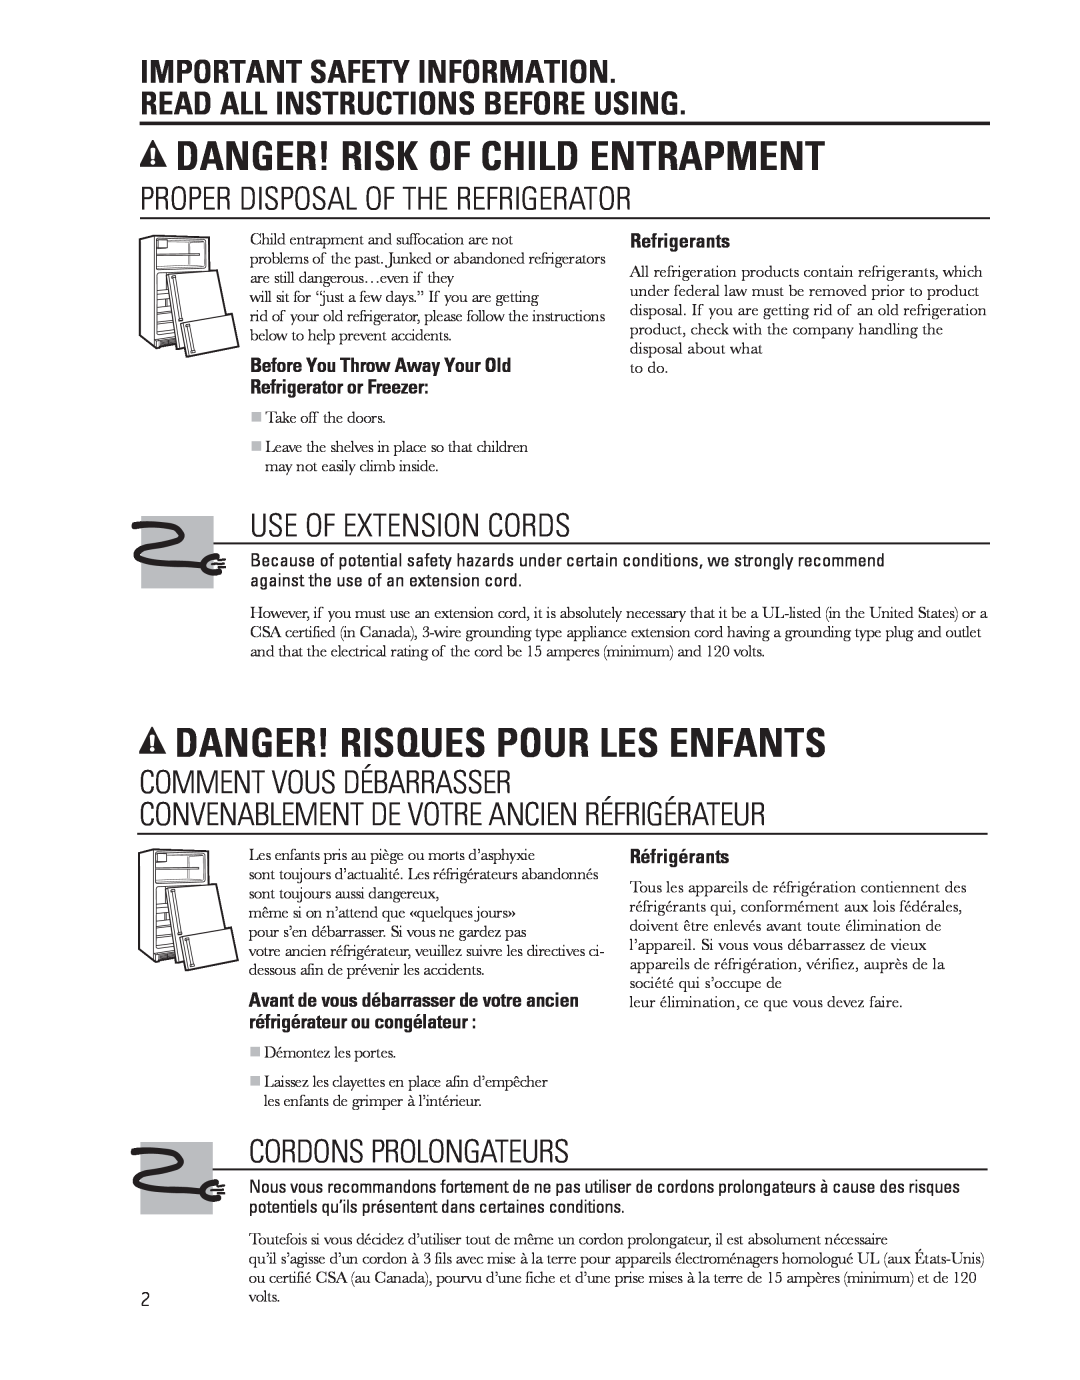 GE 16, 18, 17 Danger! Risk Of Child Entrapment, Danger! Risques Pour Les Enfants, Proper Disposal Of The Refrigerator 